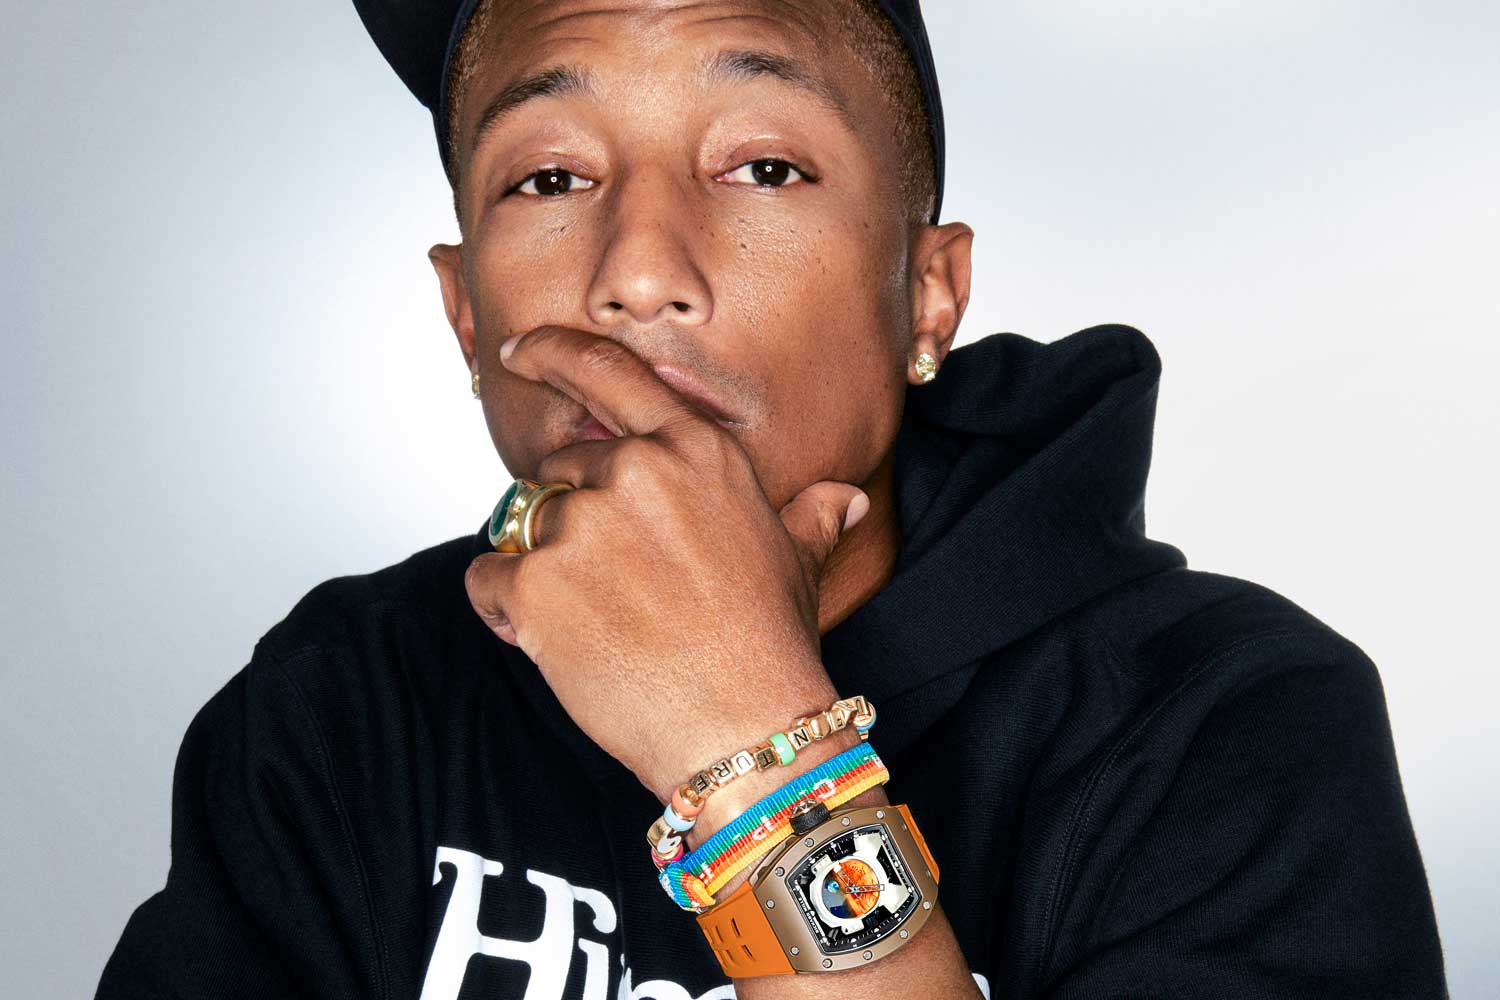 Pharrell Williams with the Richard Mille RM 52-05 Tourbillon Pharrell Williams on his wrist (Image: Robert Jaso)